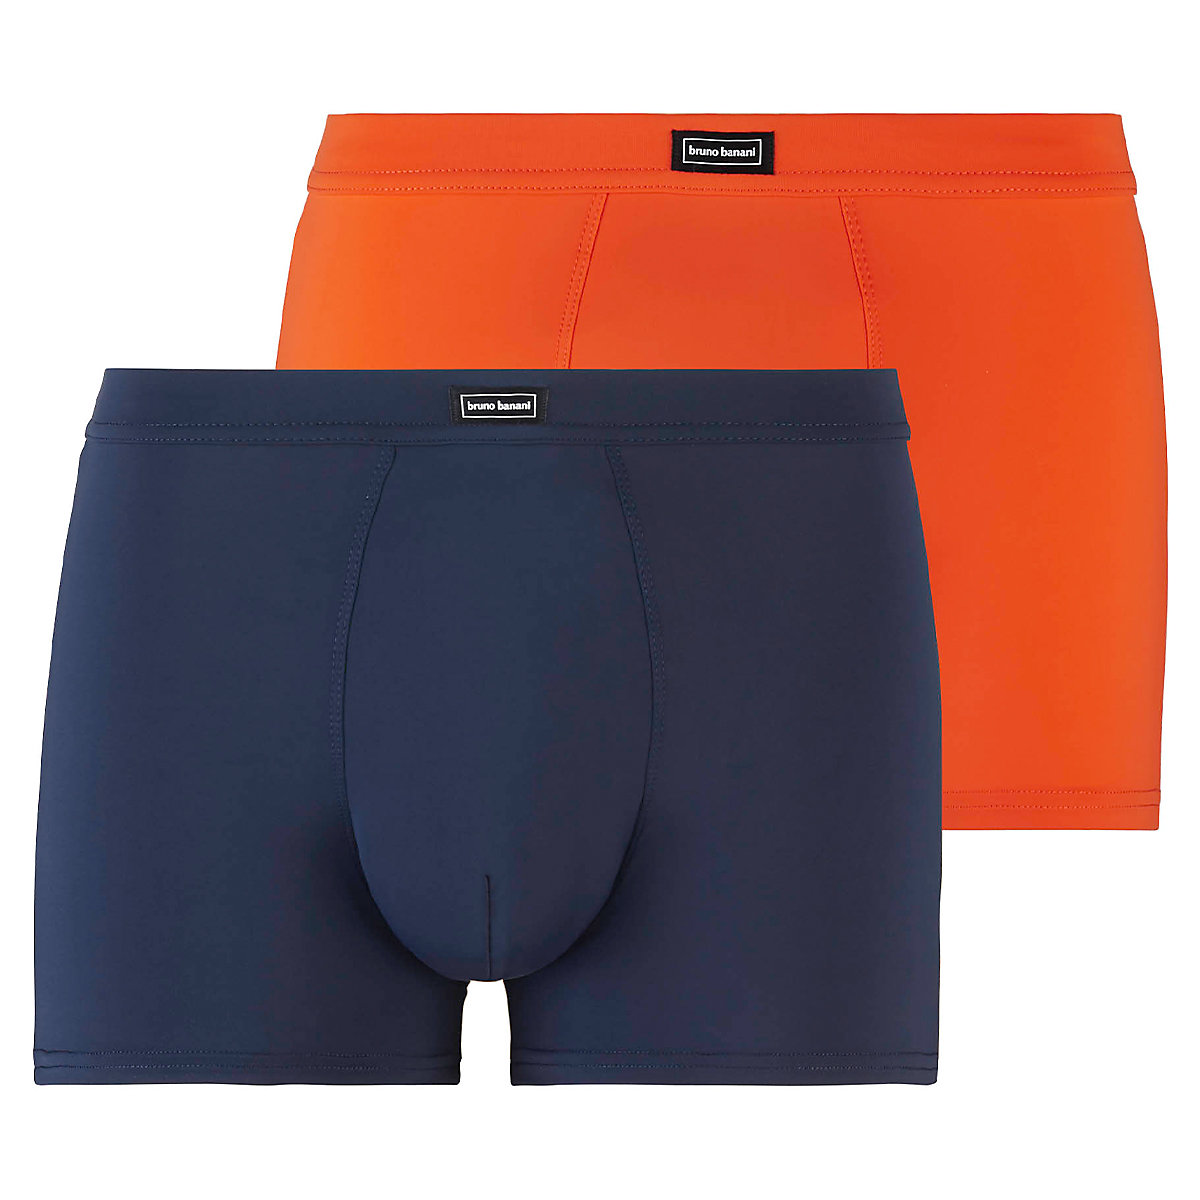 bruno banani Pants / Short 2er Pack Micro Simply Panties orange